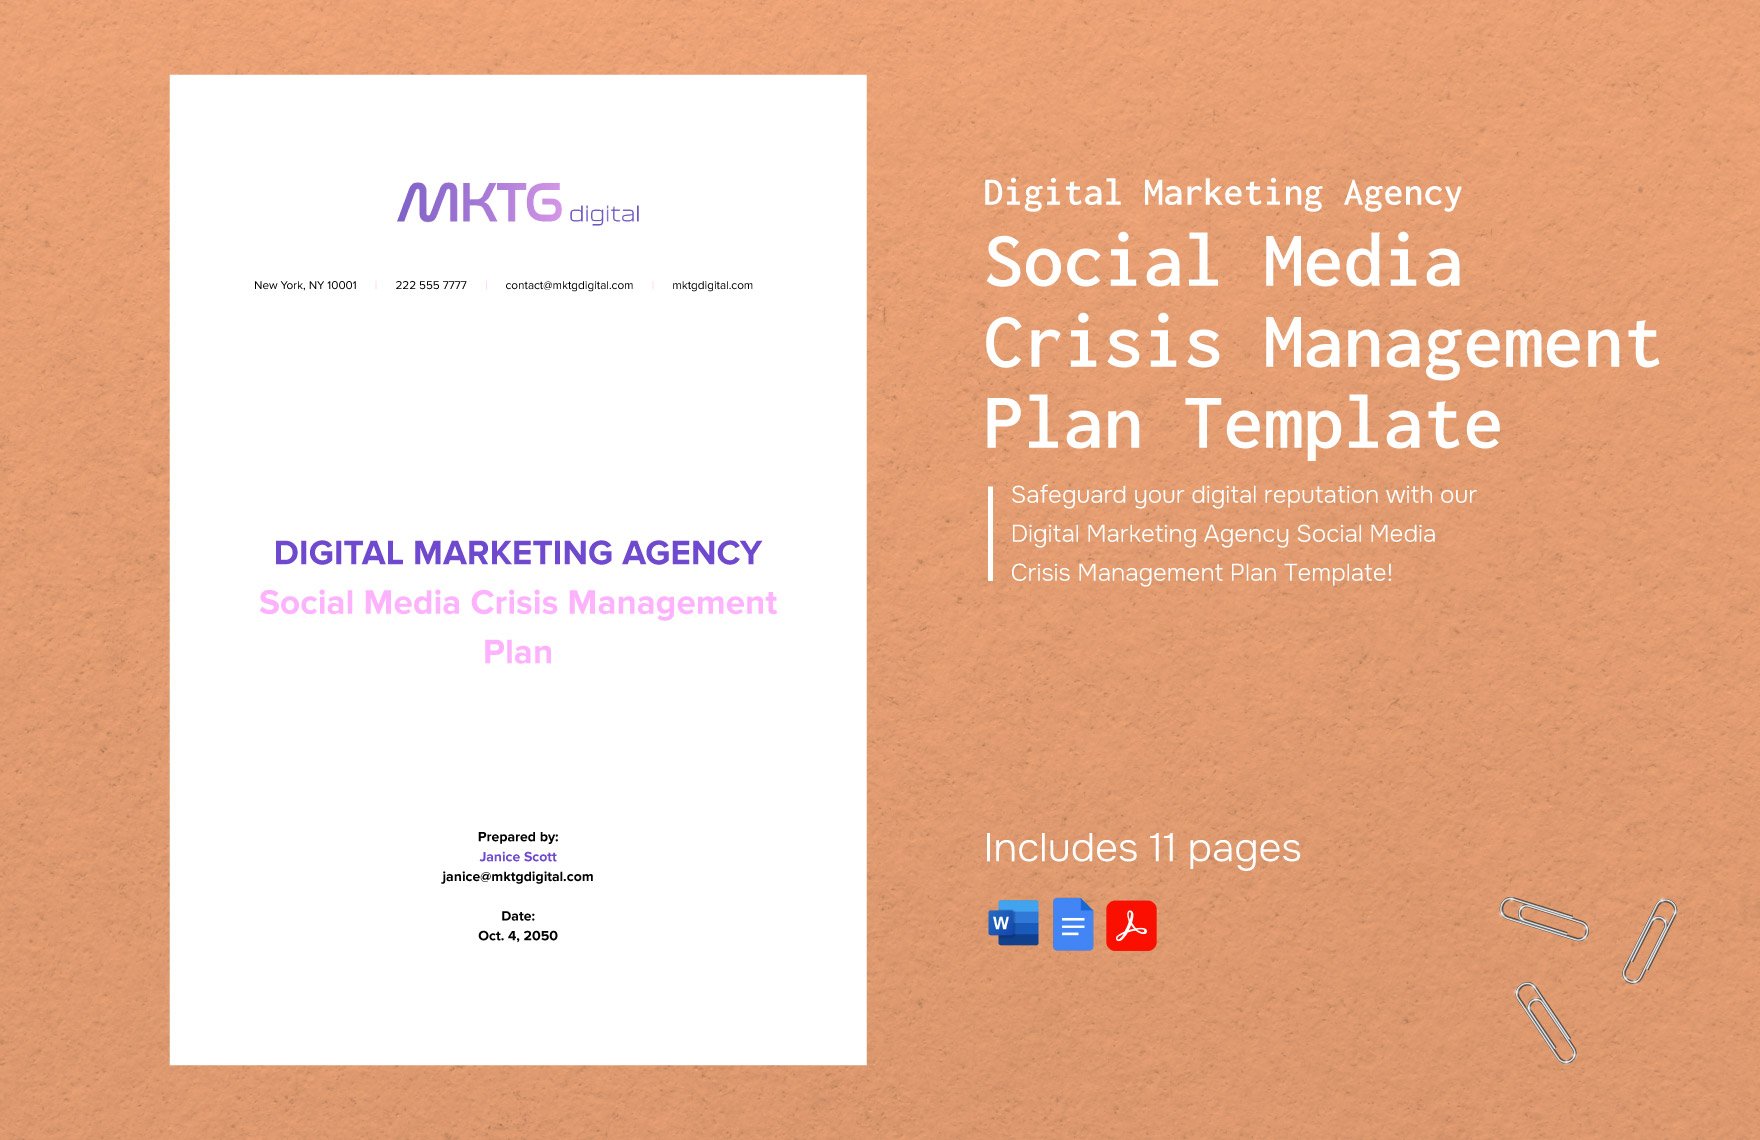 Digital Marketing Agency Social Media Crisis Management Plan Template